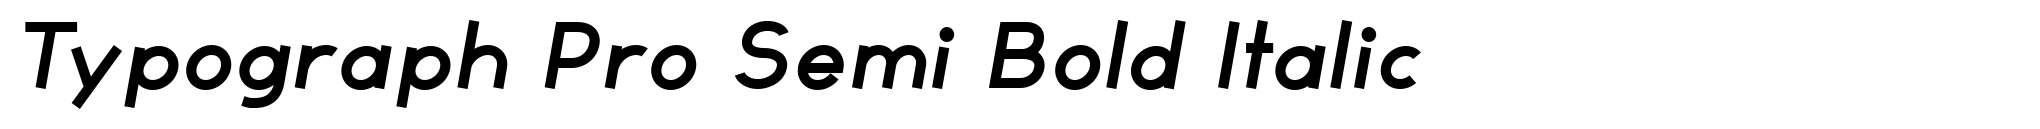 Typograph Pro Semi Bold Italic image